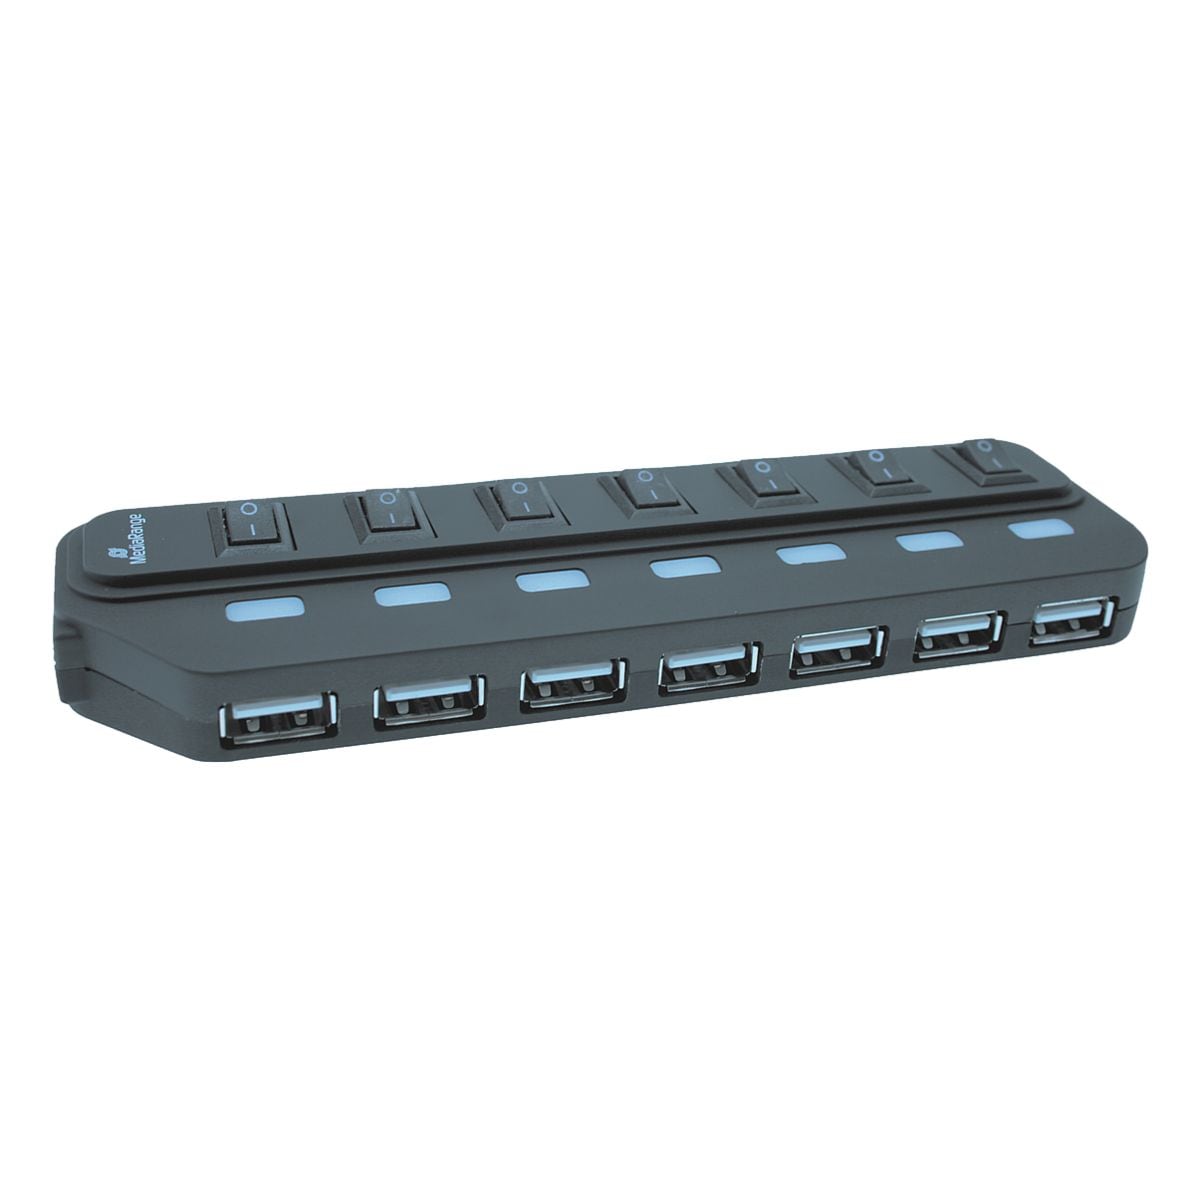 MediaRange USB-2.0 Hub 1:7 MRCS504  mit separaten Schaltern